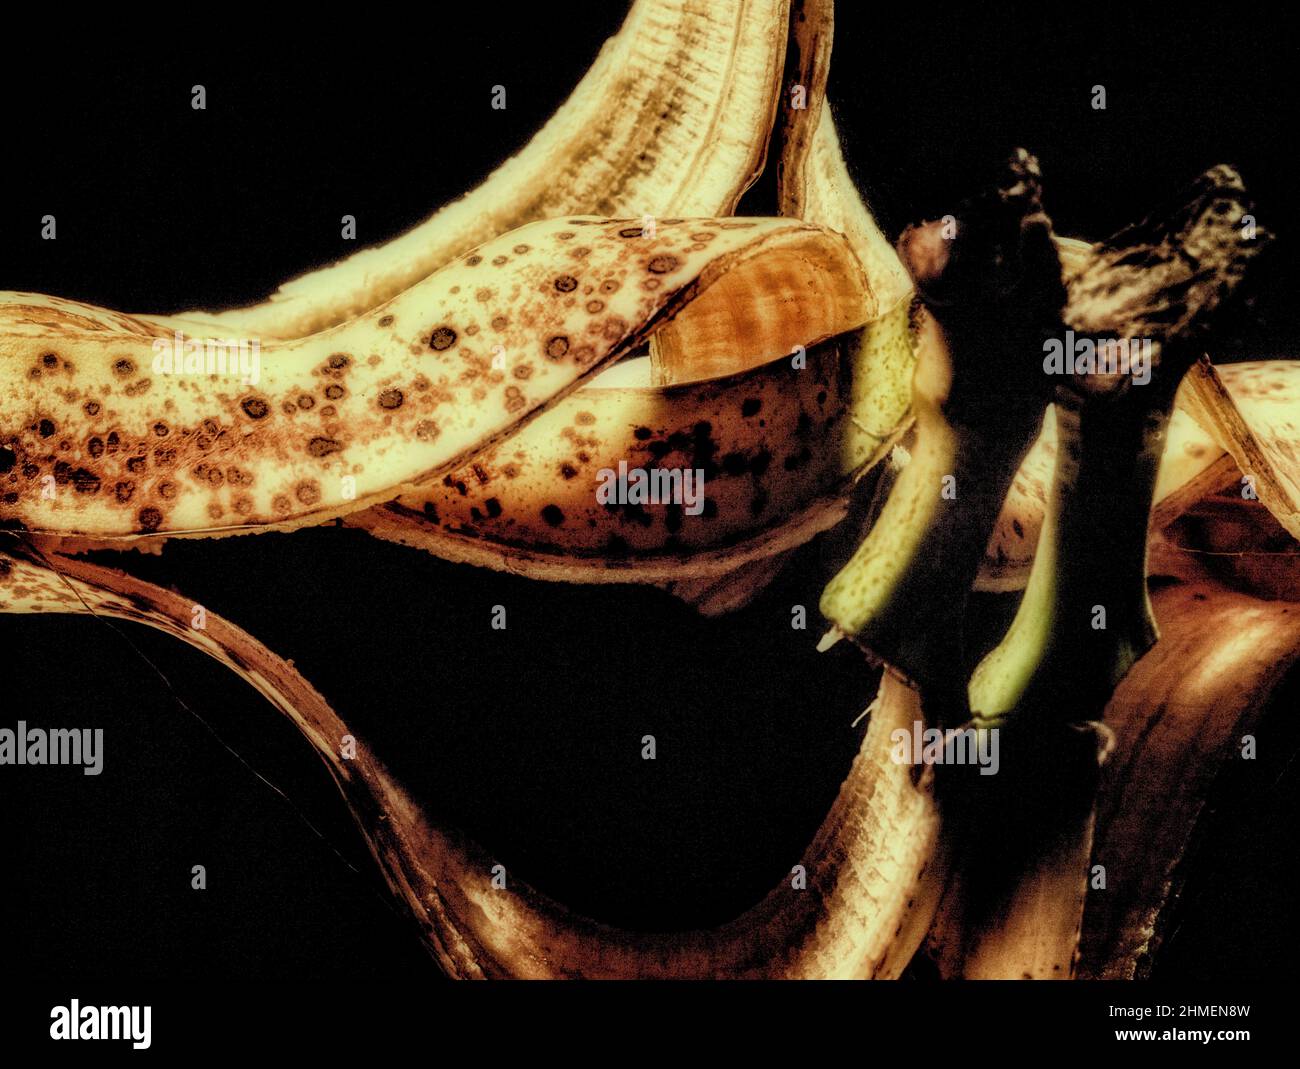 Interesting Banana skin food still life against black background Stock Photo